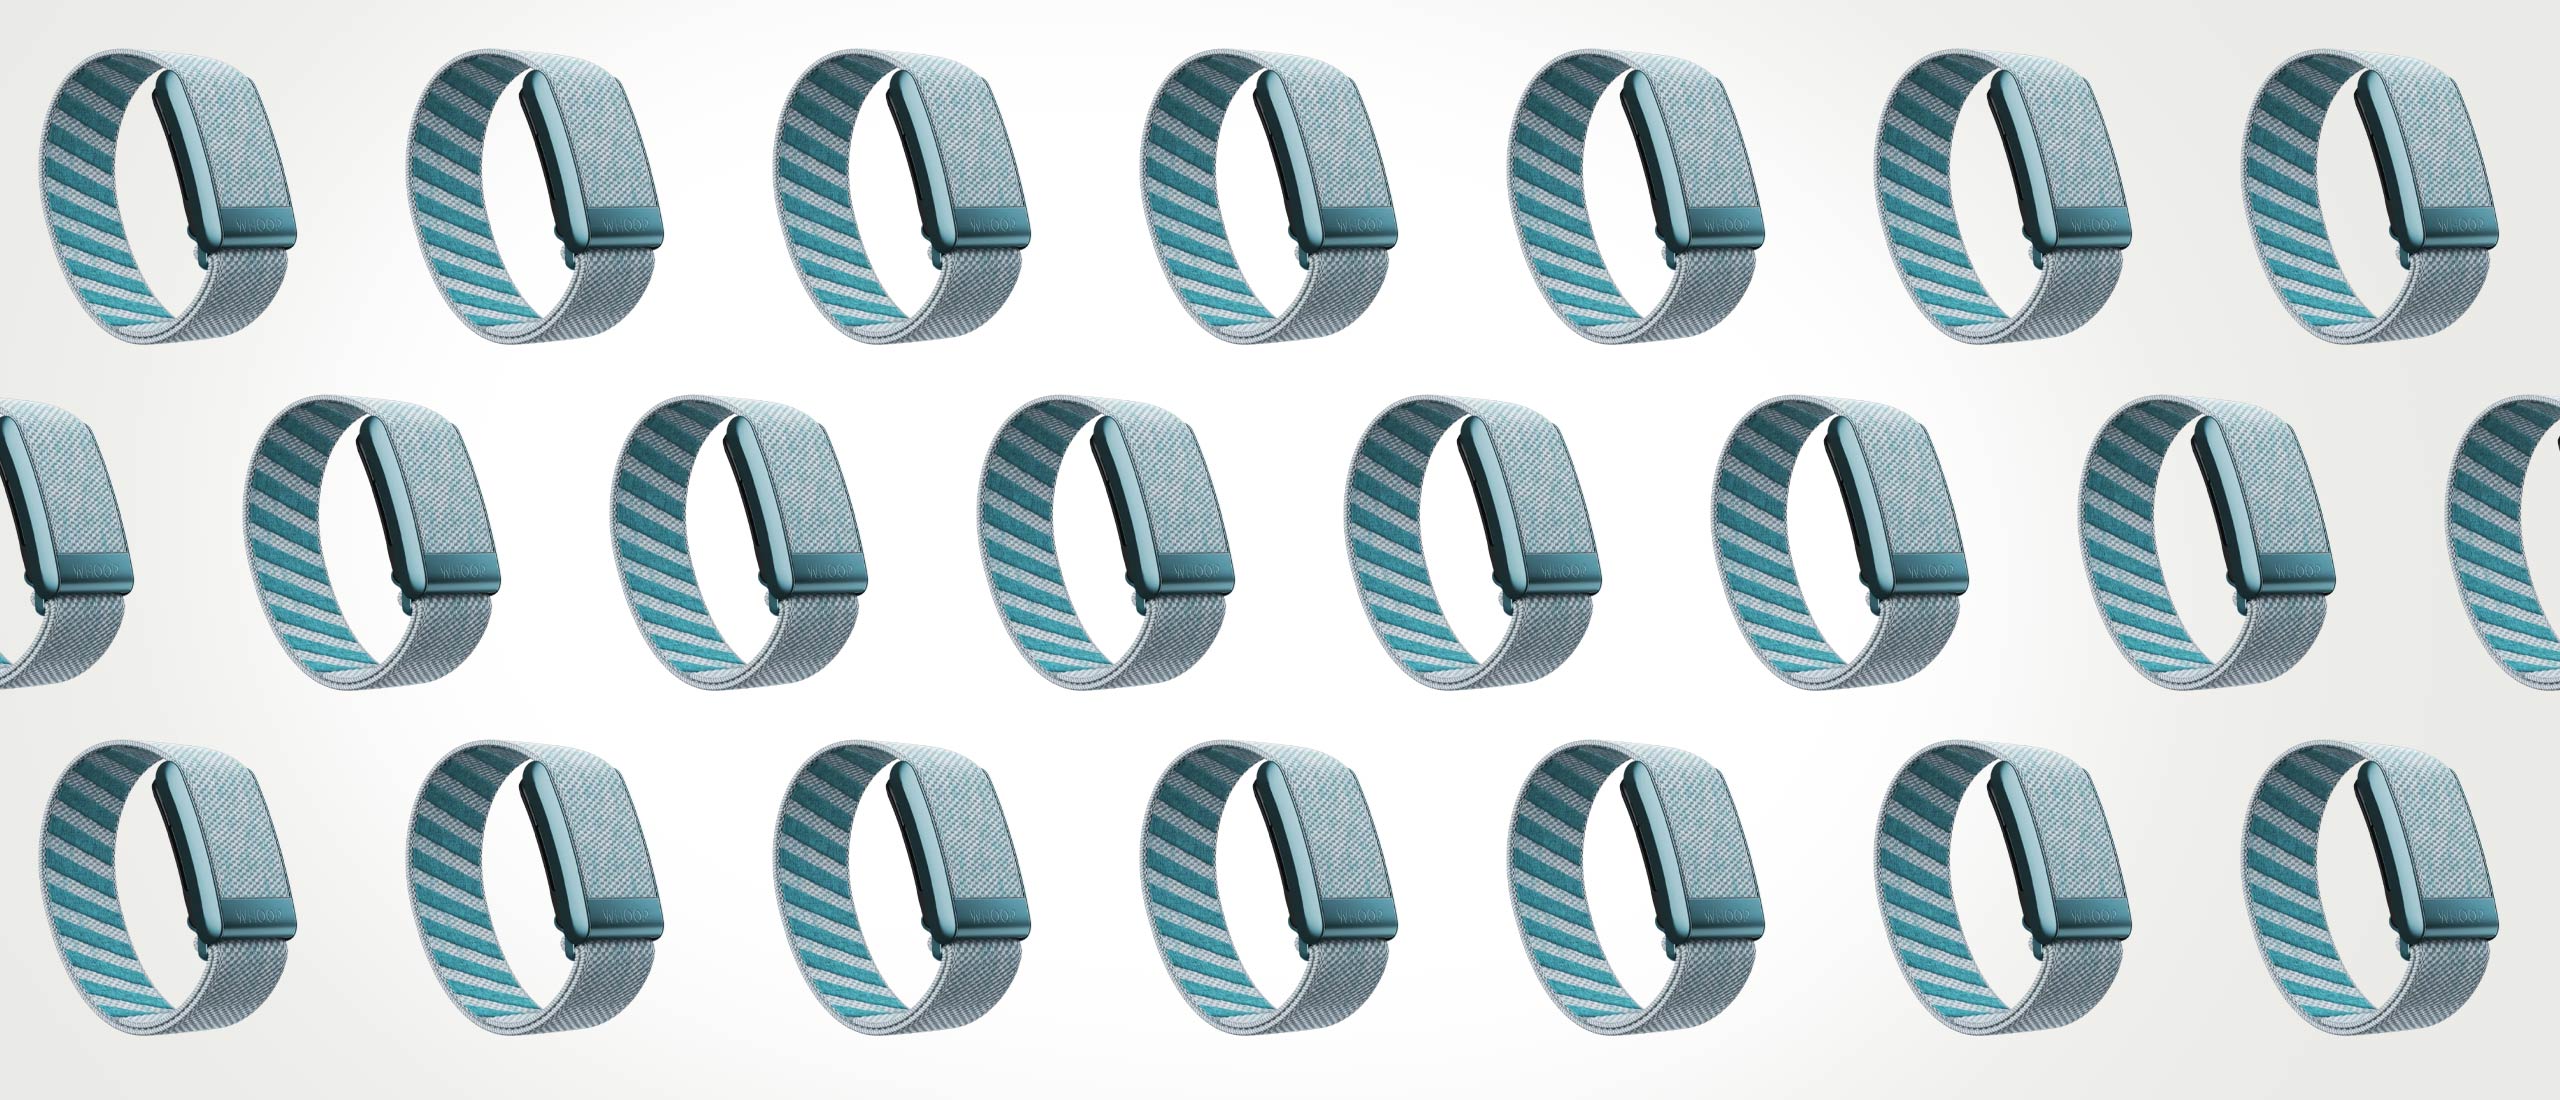 repeating image of sleep tracker bracelet on white background